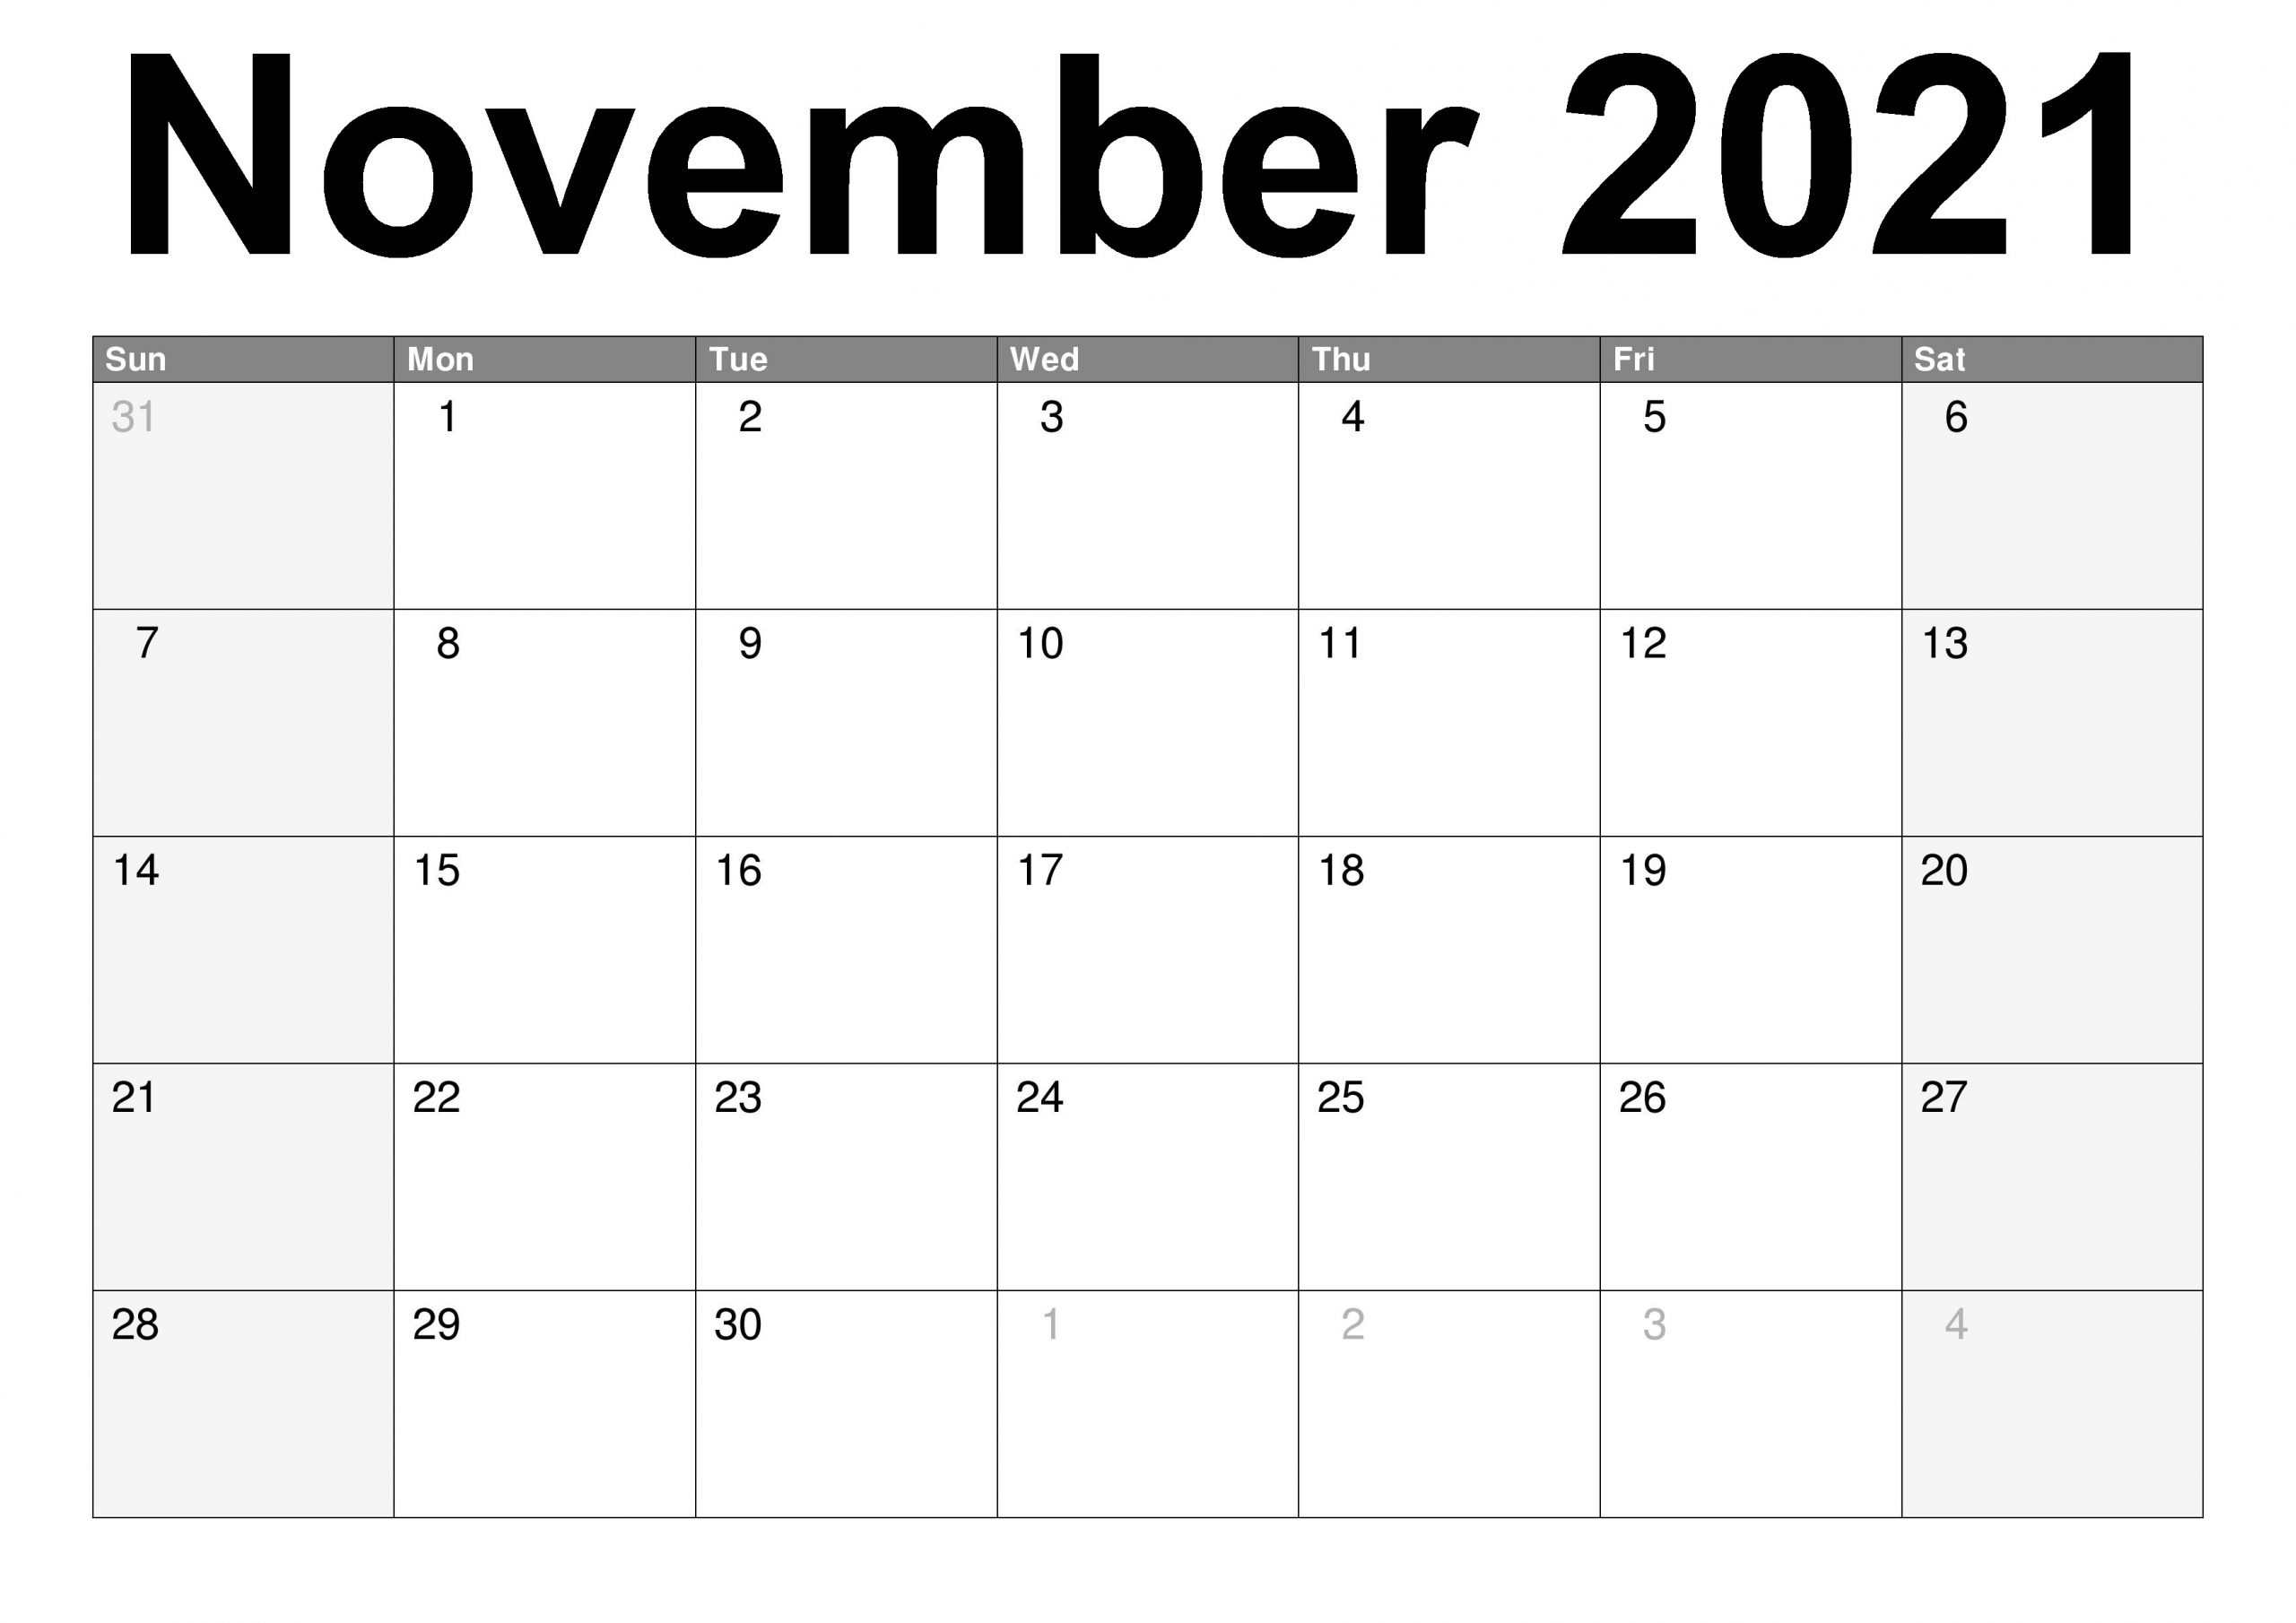 November 2021 Calendar Blank Month Template